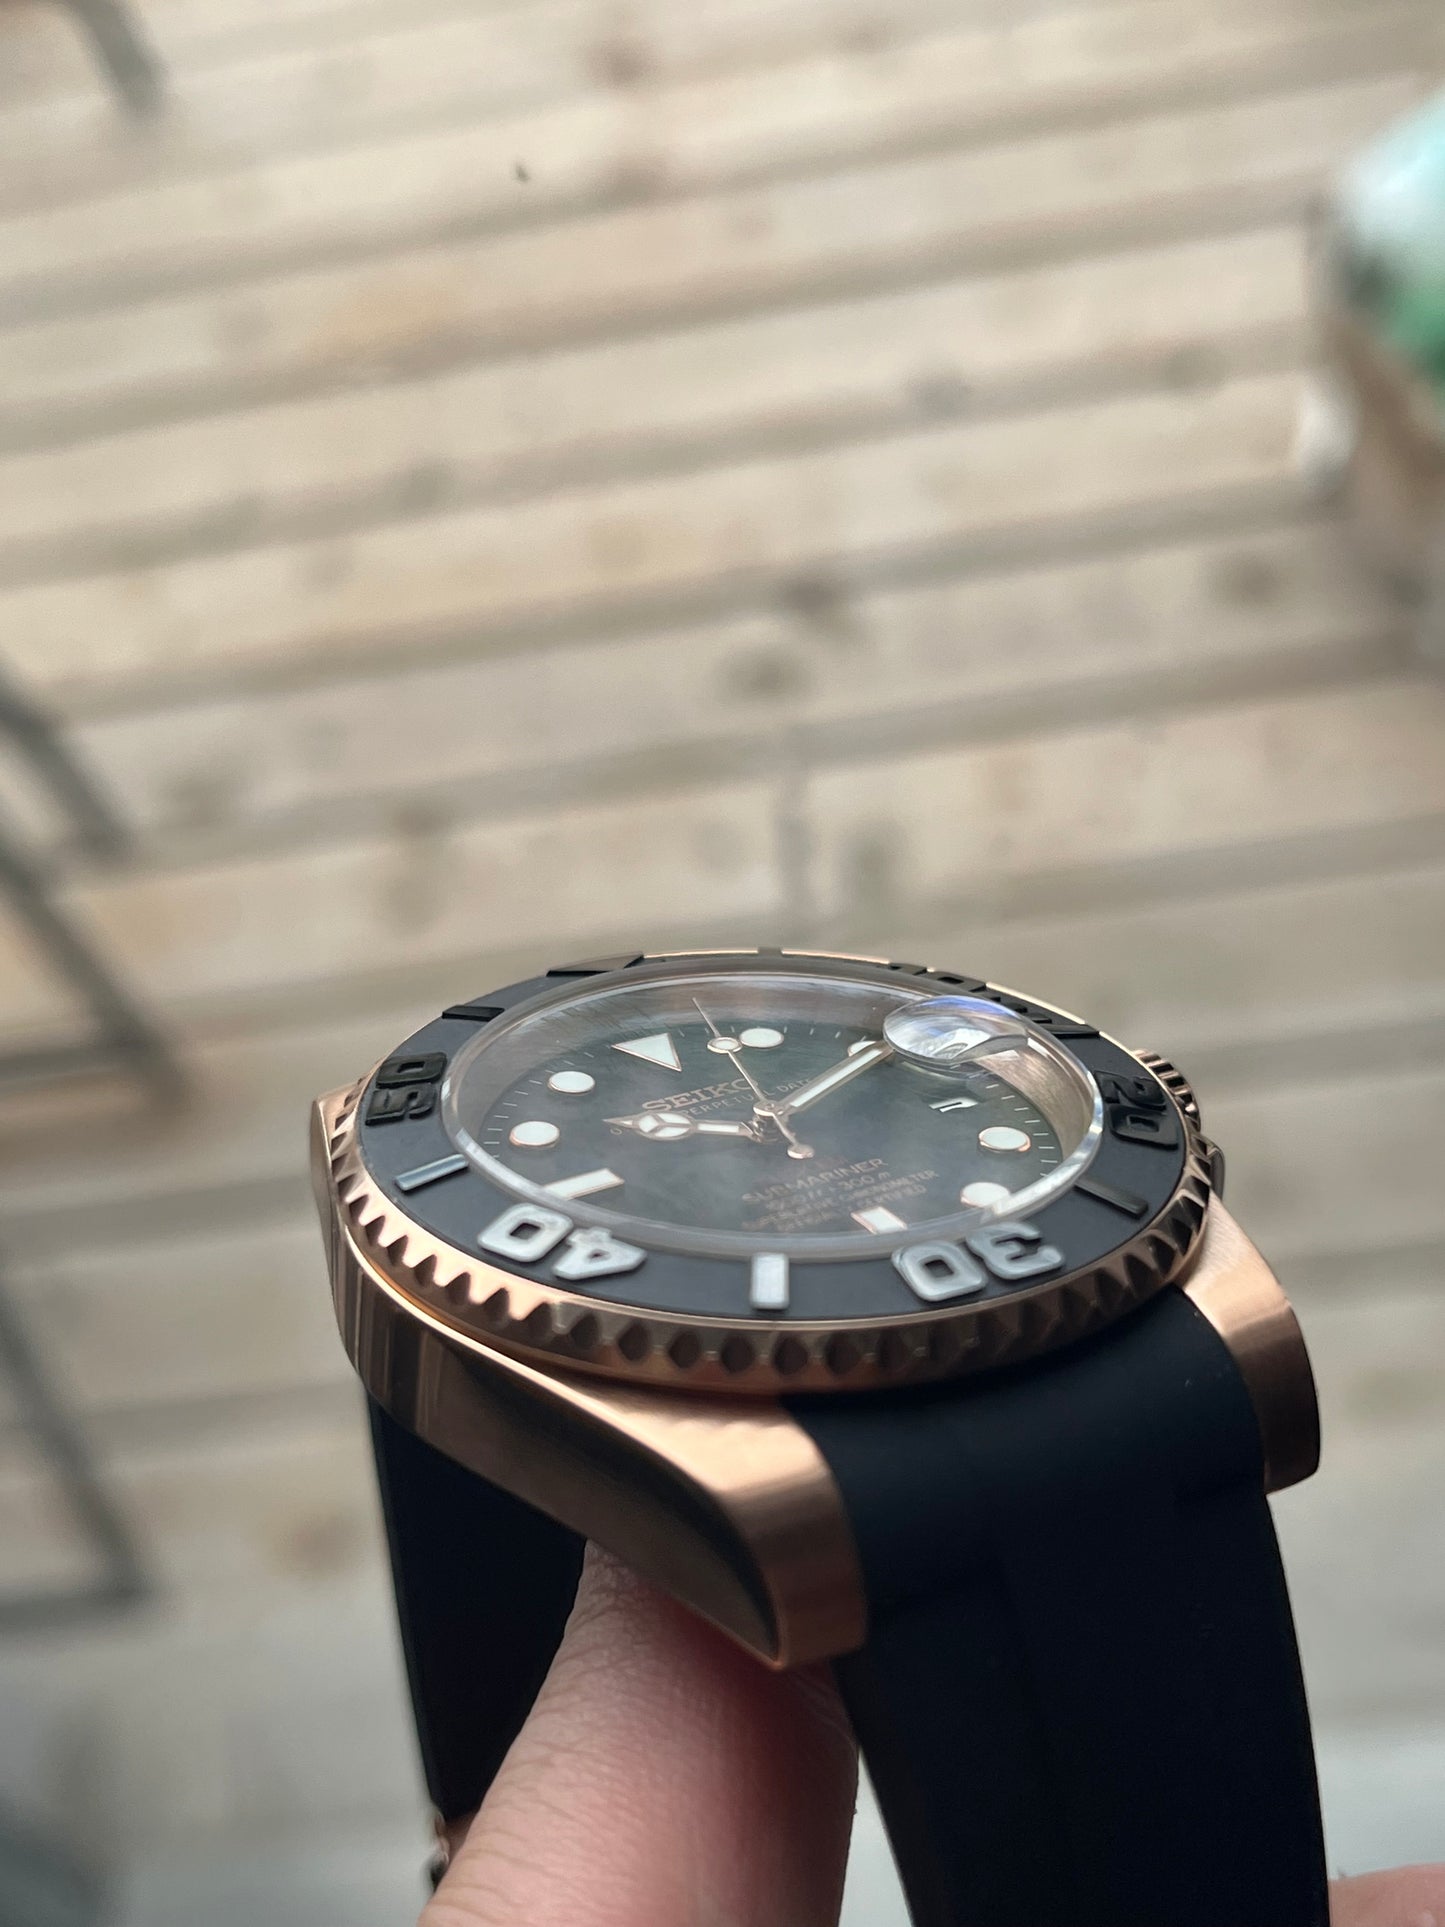 Seiko mod “fuck em” rosegold submariner automatic watch